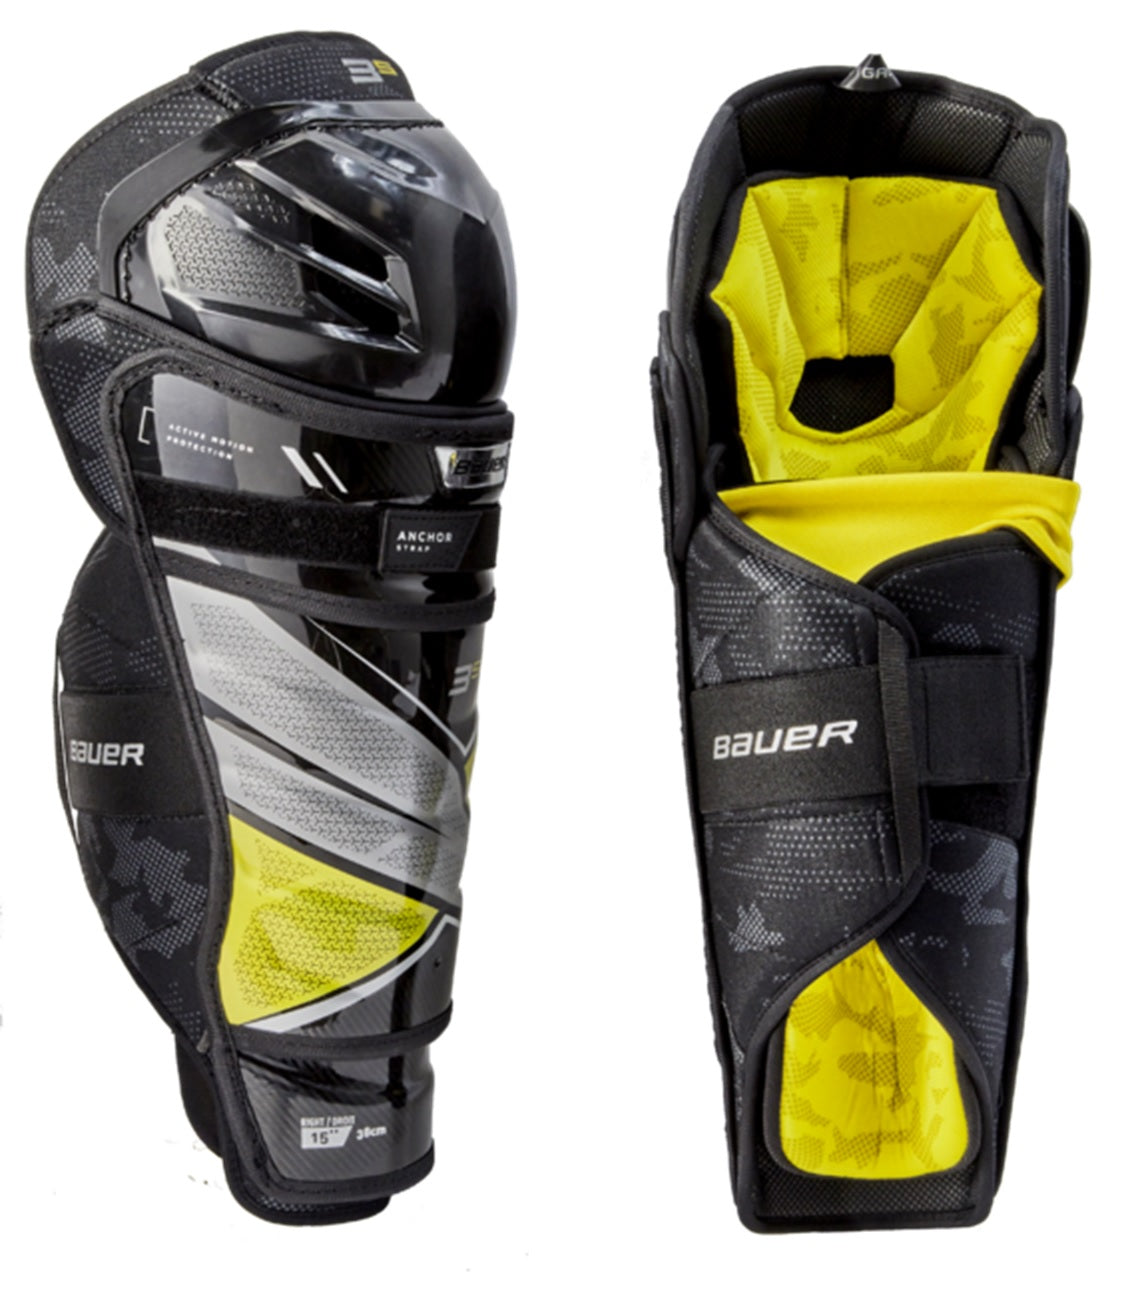 Bauer leg protection shin guards Supreme 3S 13" Shin Guard knee pads